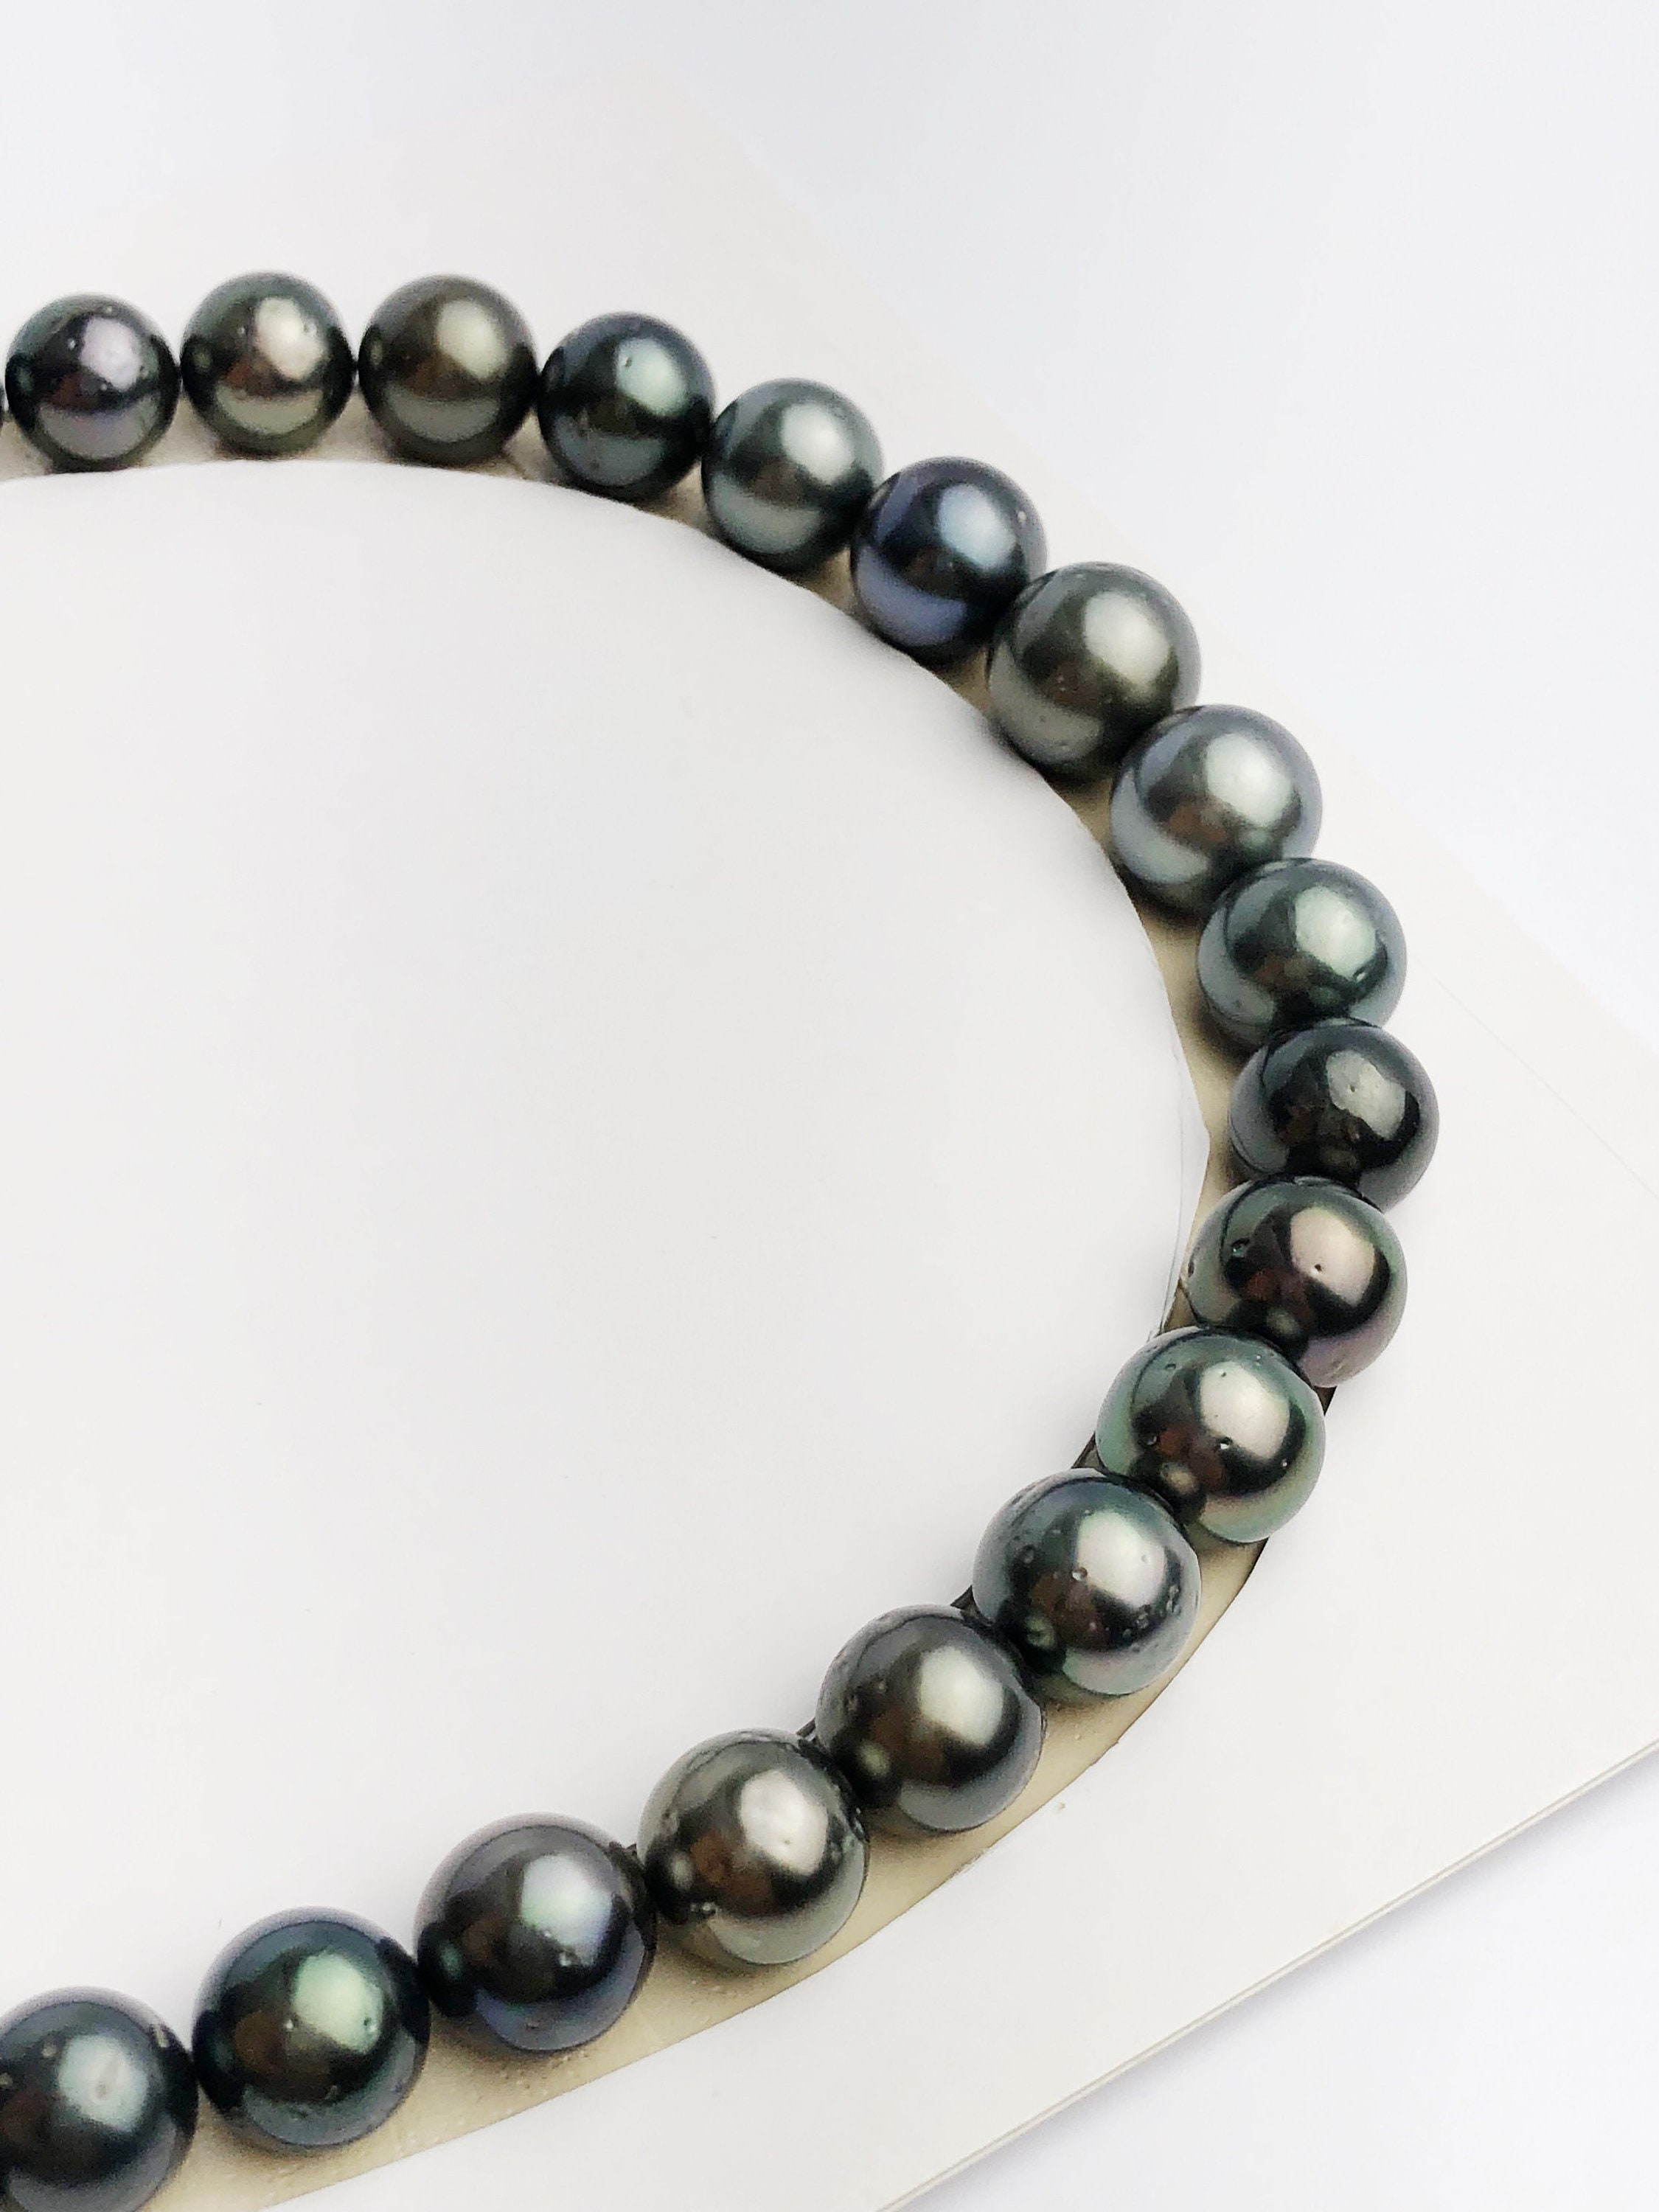 Loose Tahitian Pearls Set, Multicolor, Wholesale - Only 21 per pearl ...